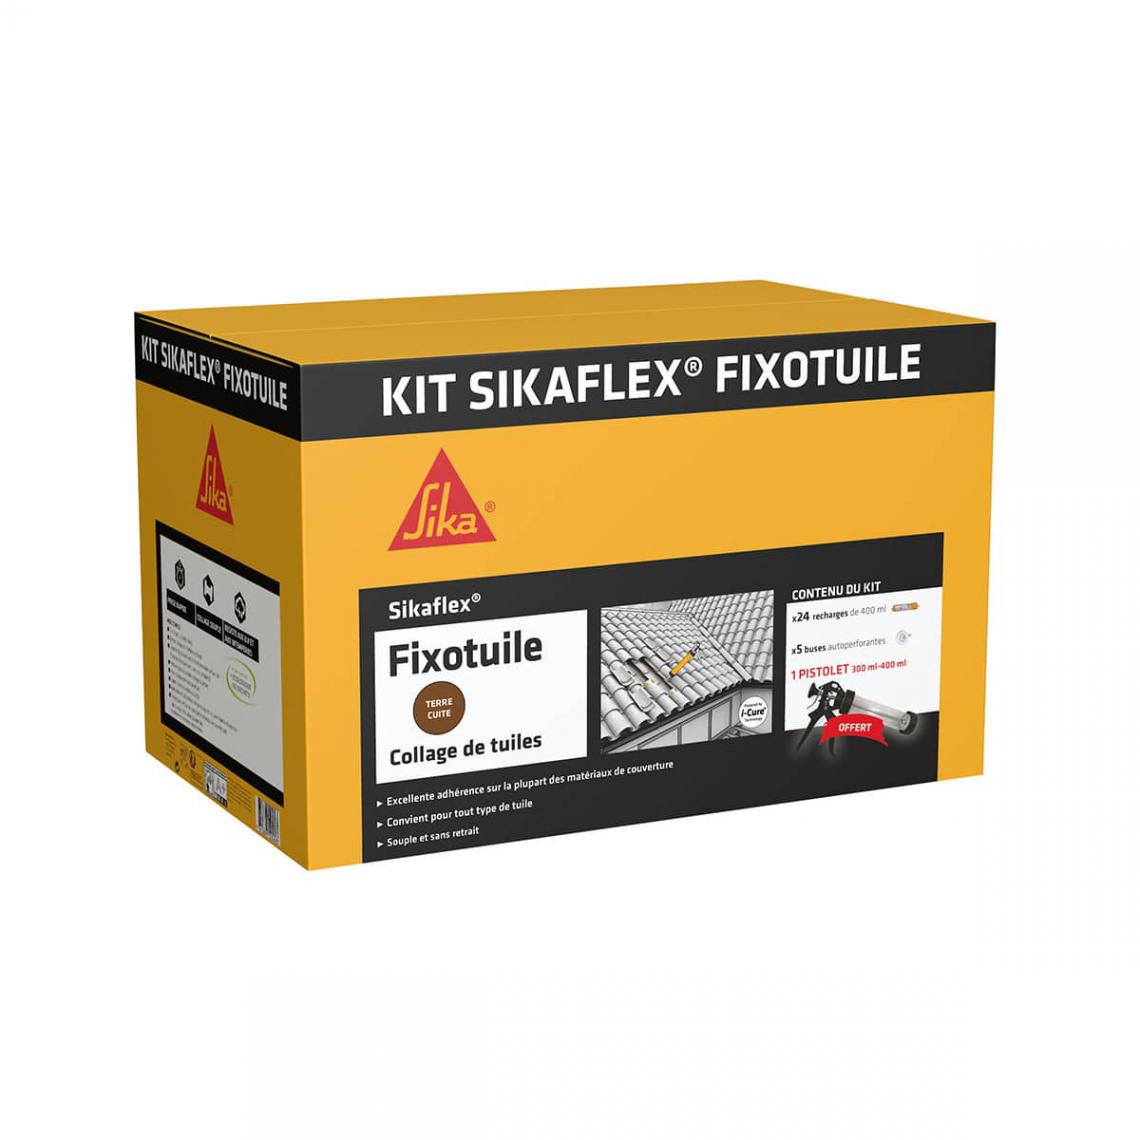 Sika - Mastic-colle souple SIKA kit Sikaflex Fixotuile - Terre cuite - 24 recharges - Colle & adhésif